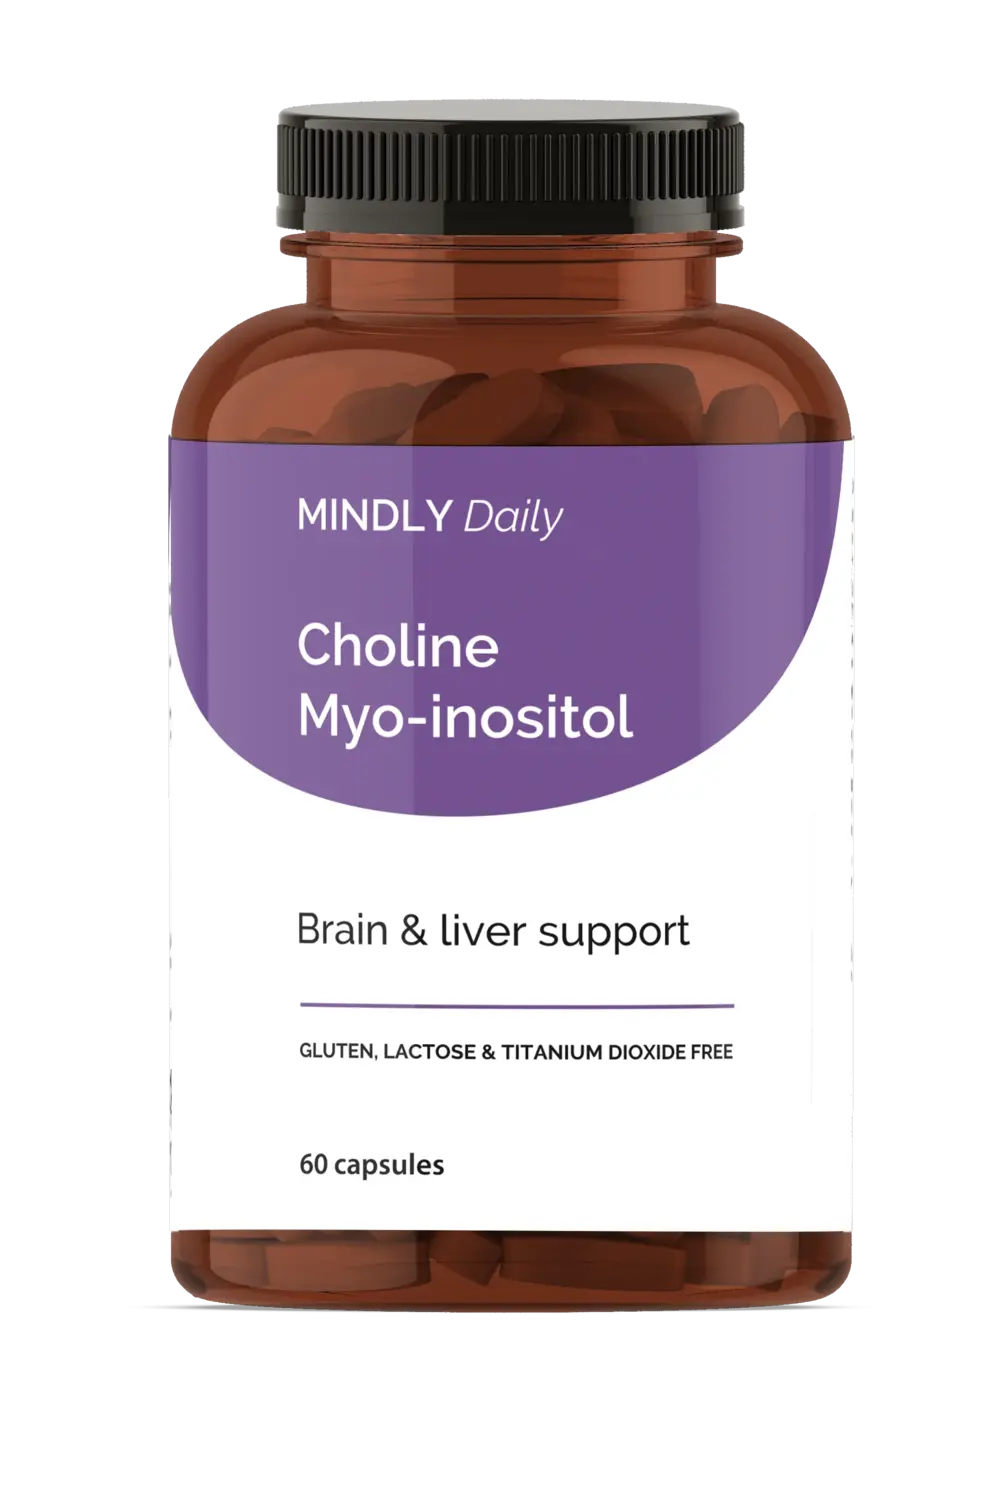 Choline Myo-inositol